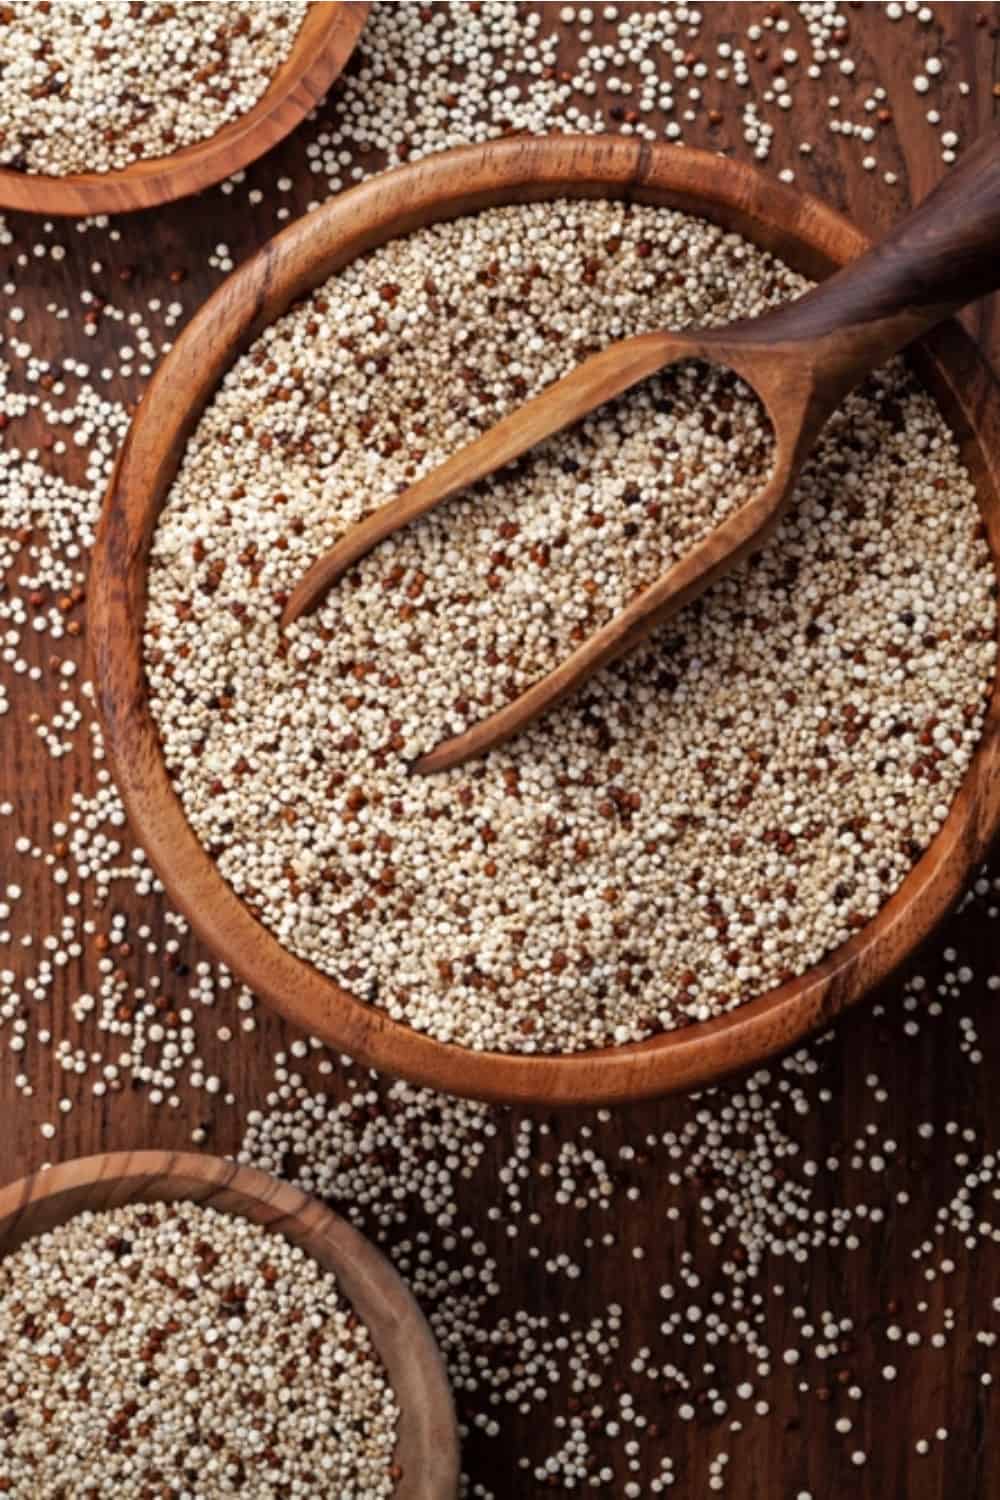 quinoa in a wooden bowl